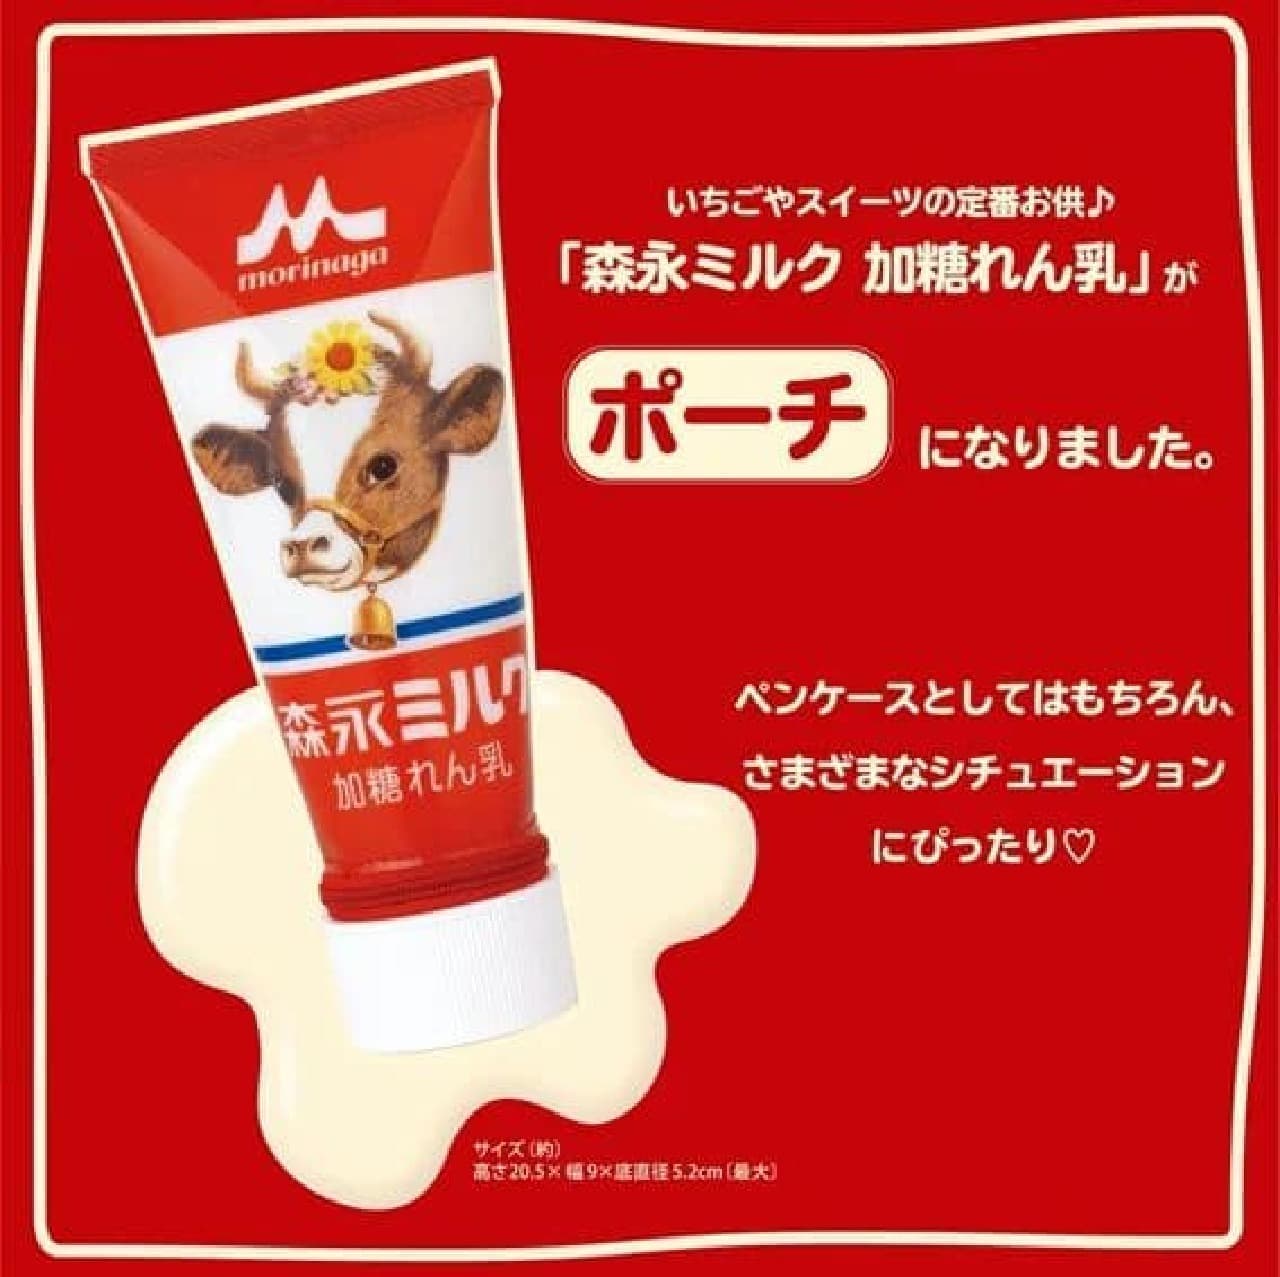 Morinaga Milk: Molten Sugar Renmilk Tube-Shaped Pouch Book" by Takarajimasya